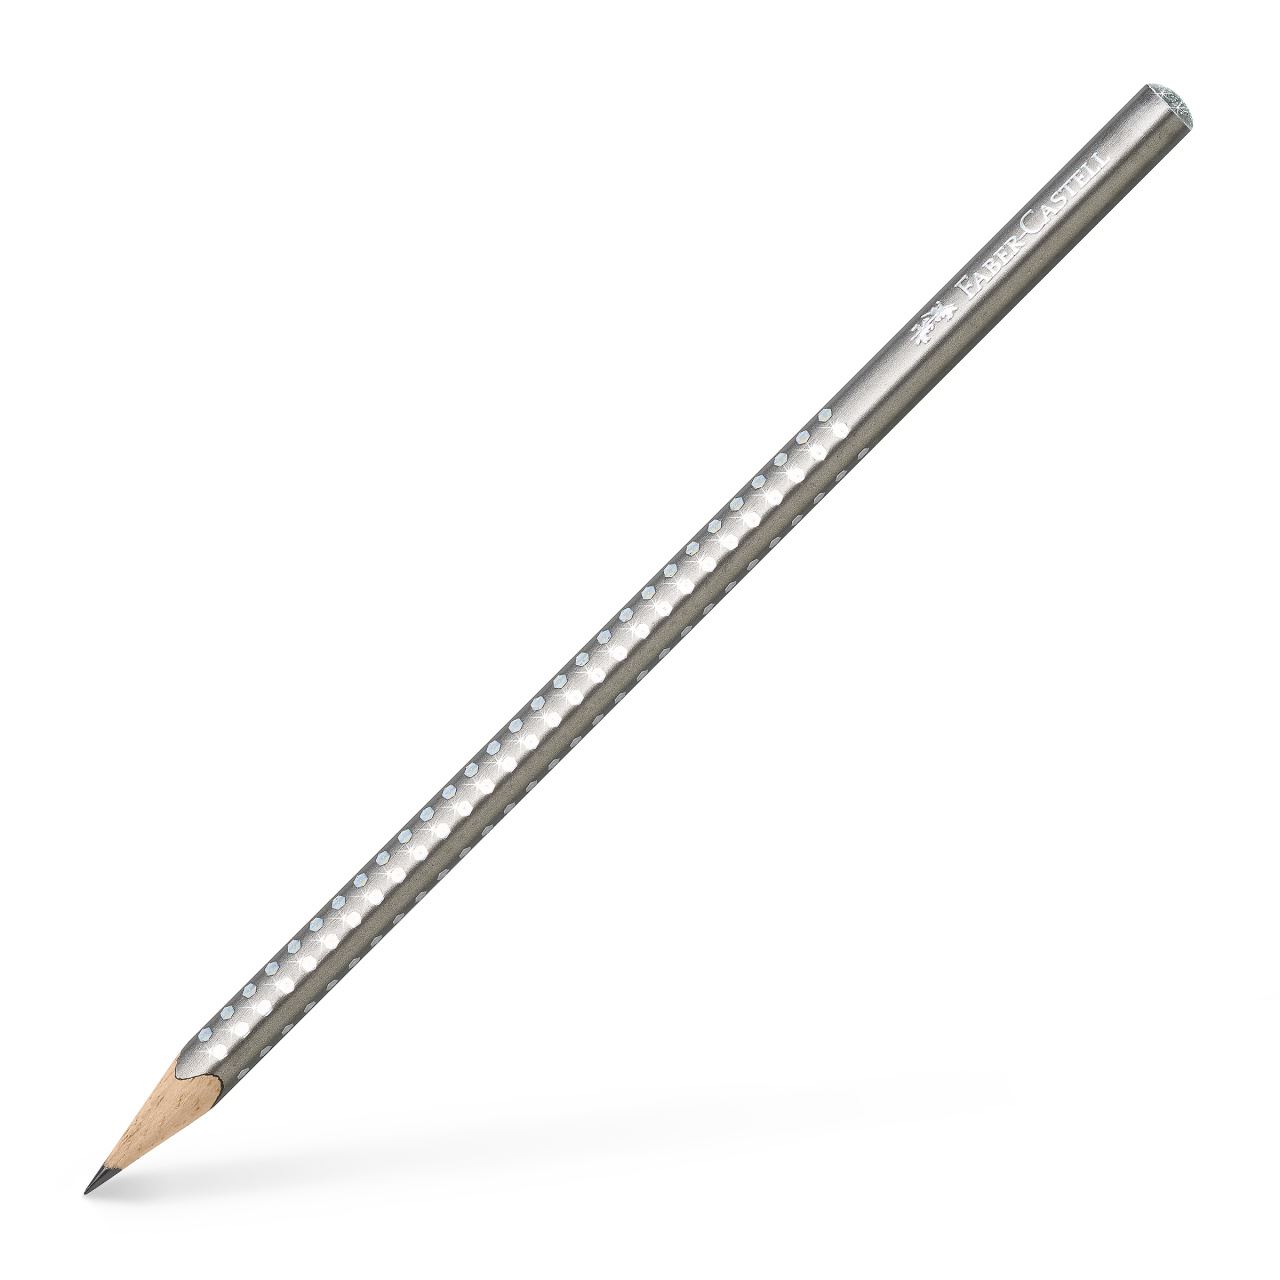 Faber-Castell - Sparkle graphite pencil, pearl silver